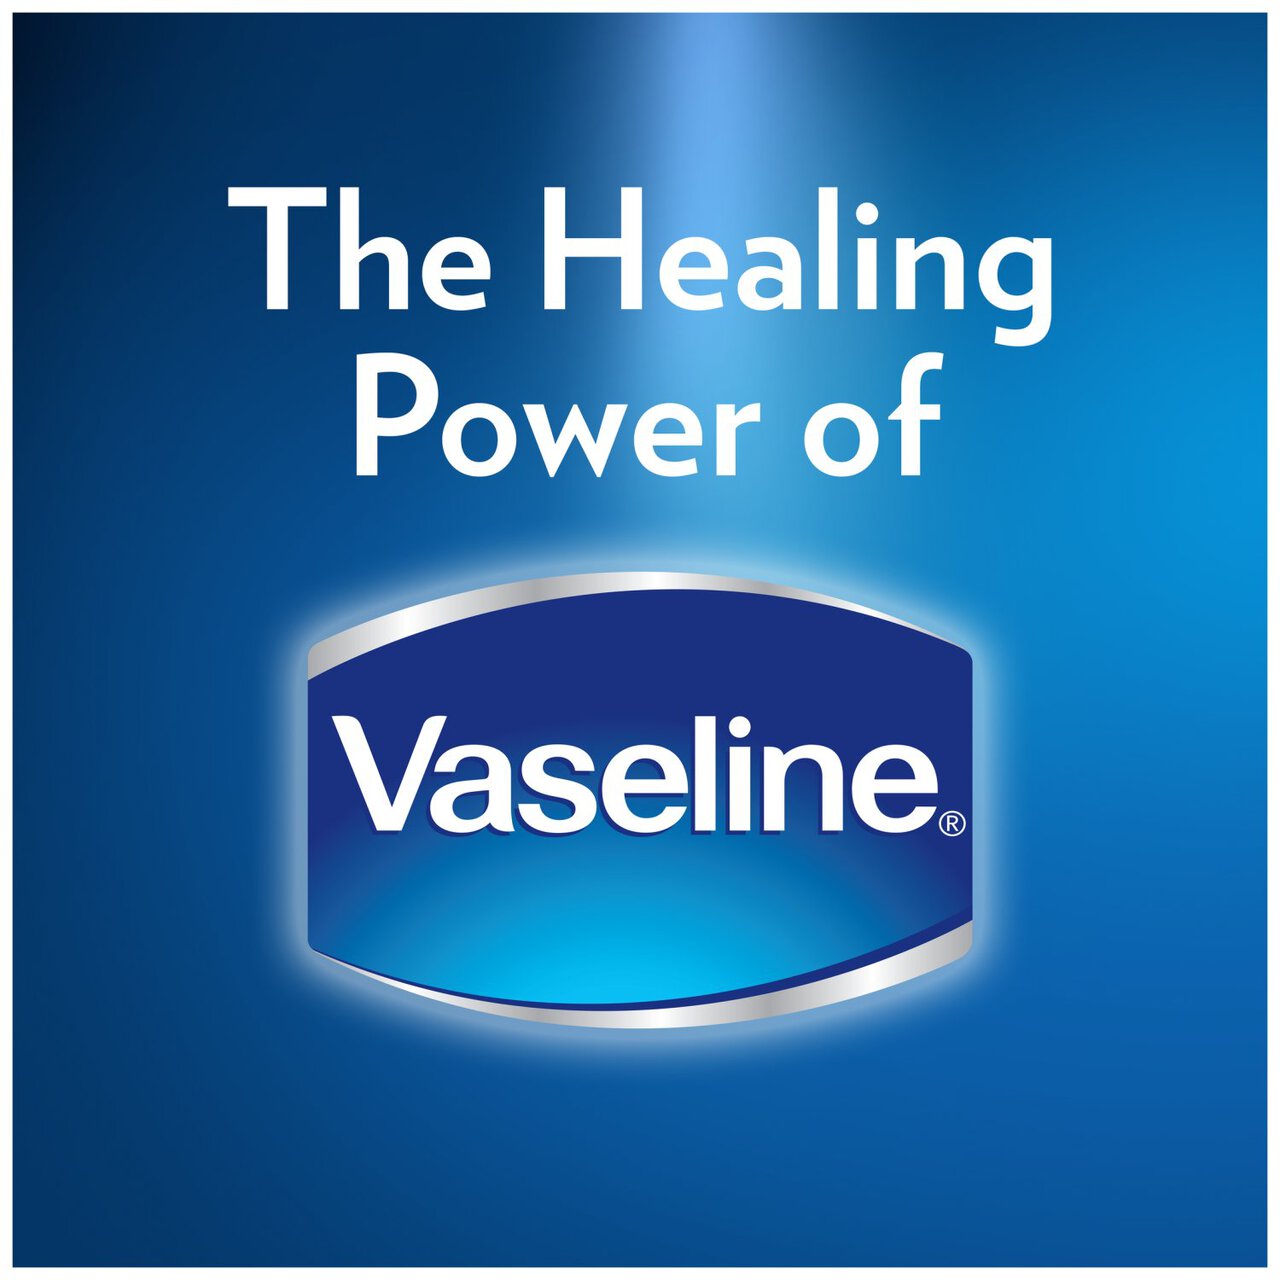 Vaseline Intensive Care Healthy Hands + Stronger Nails Hand Cream 75ml